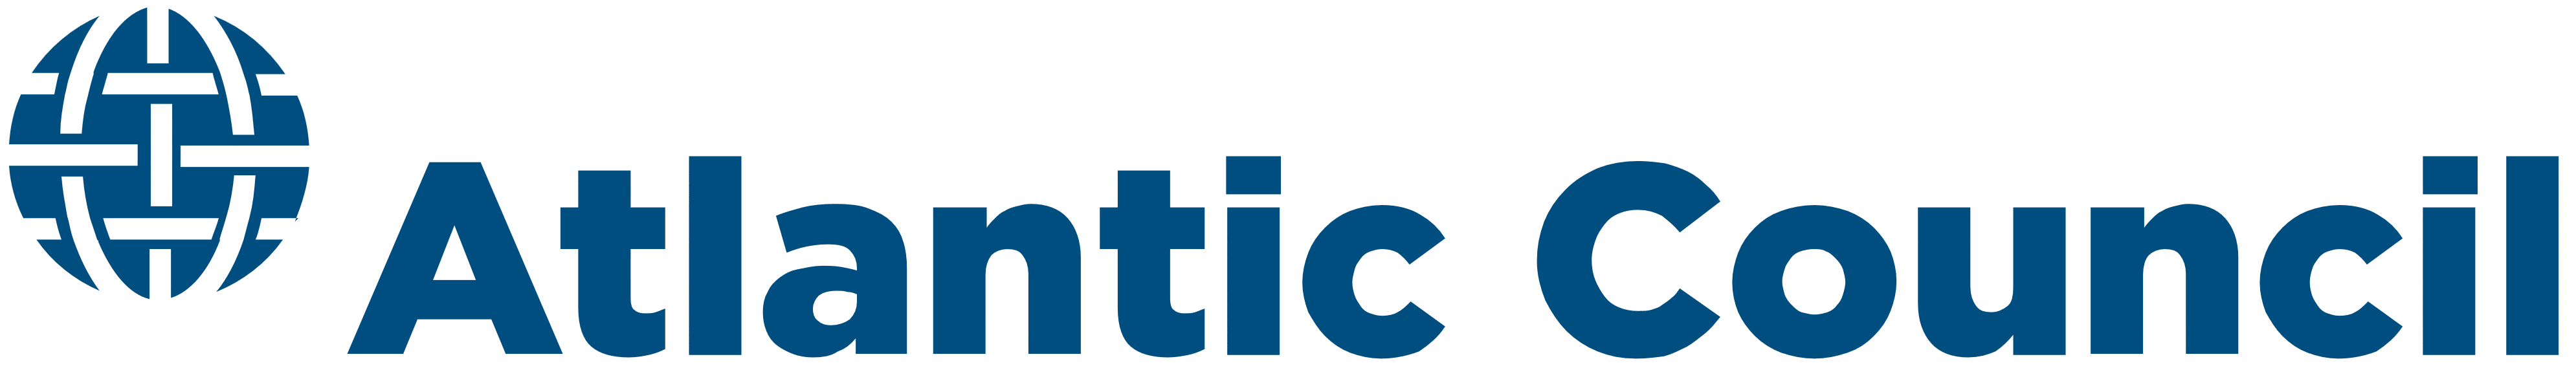 Atlantic Council – See full article